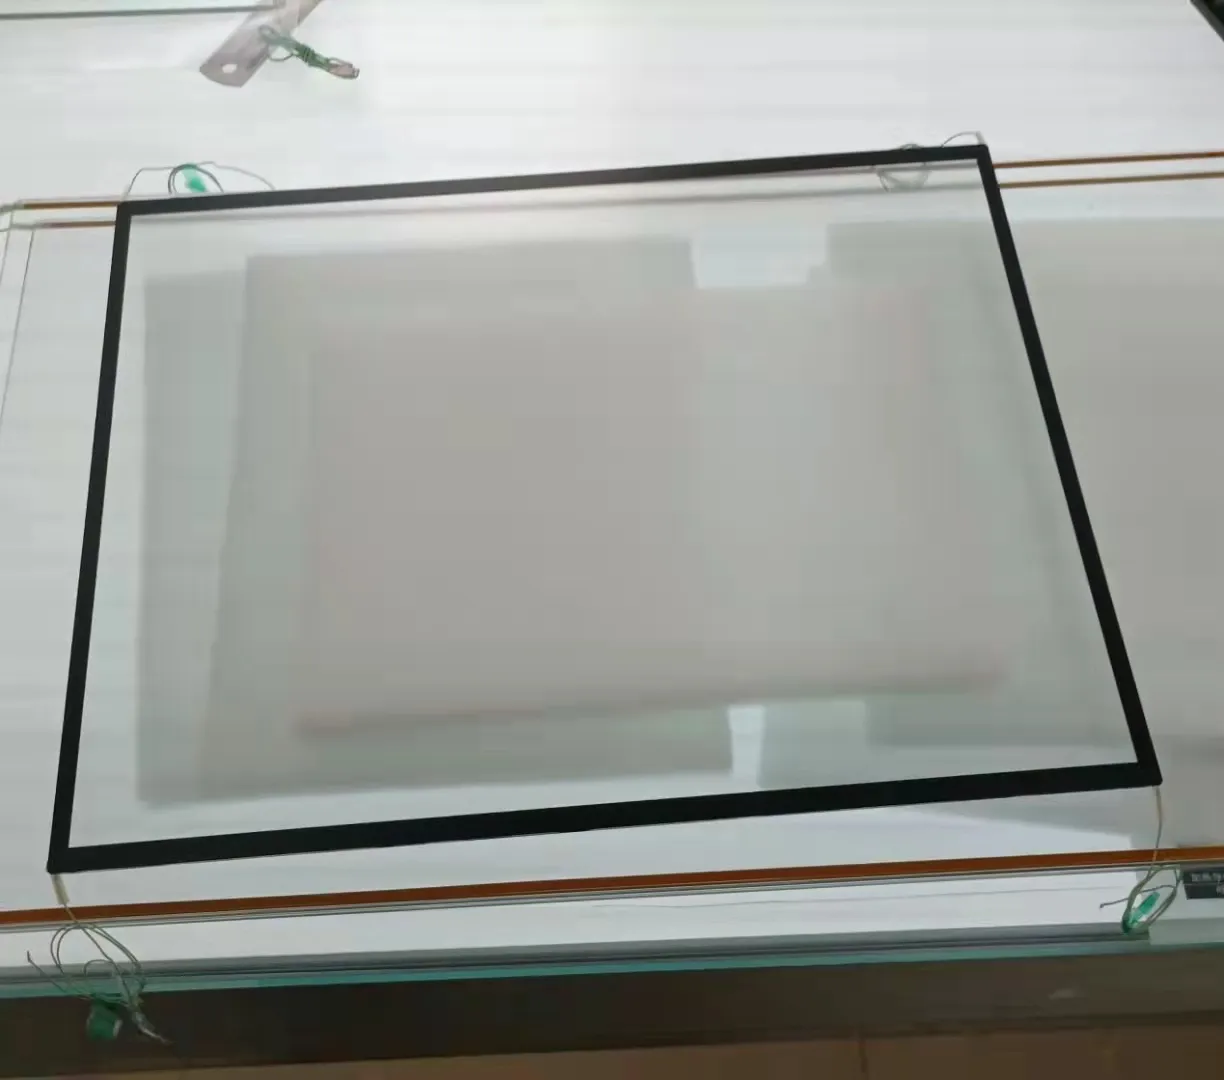 Fornitura di fabbrica finestre a rete schermate elettricamente conduttive per compatibilità elettromagnetica